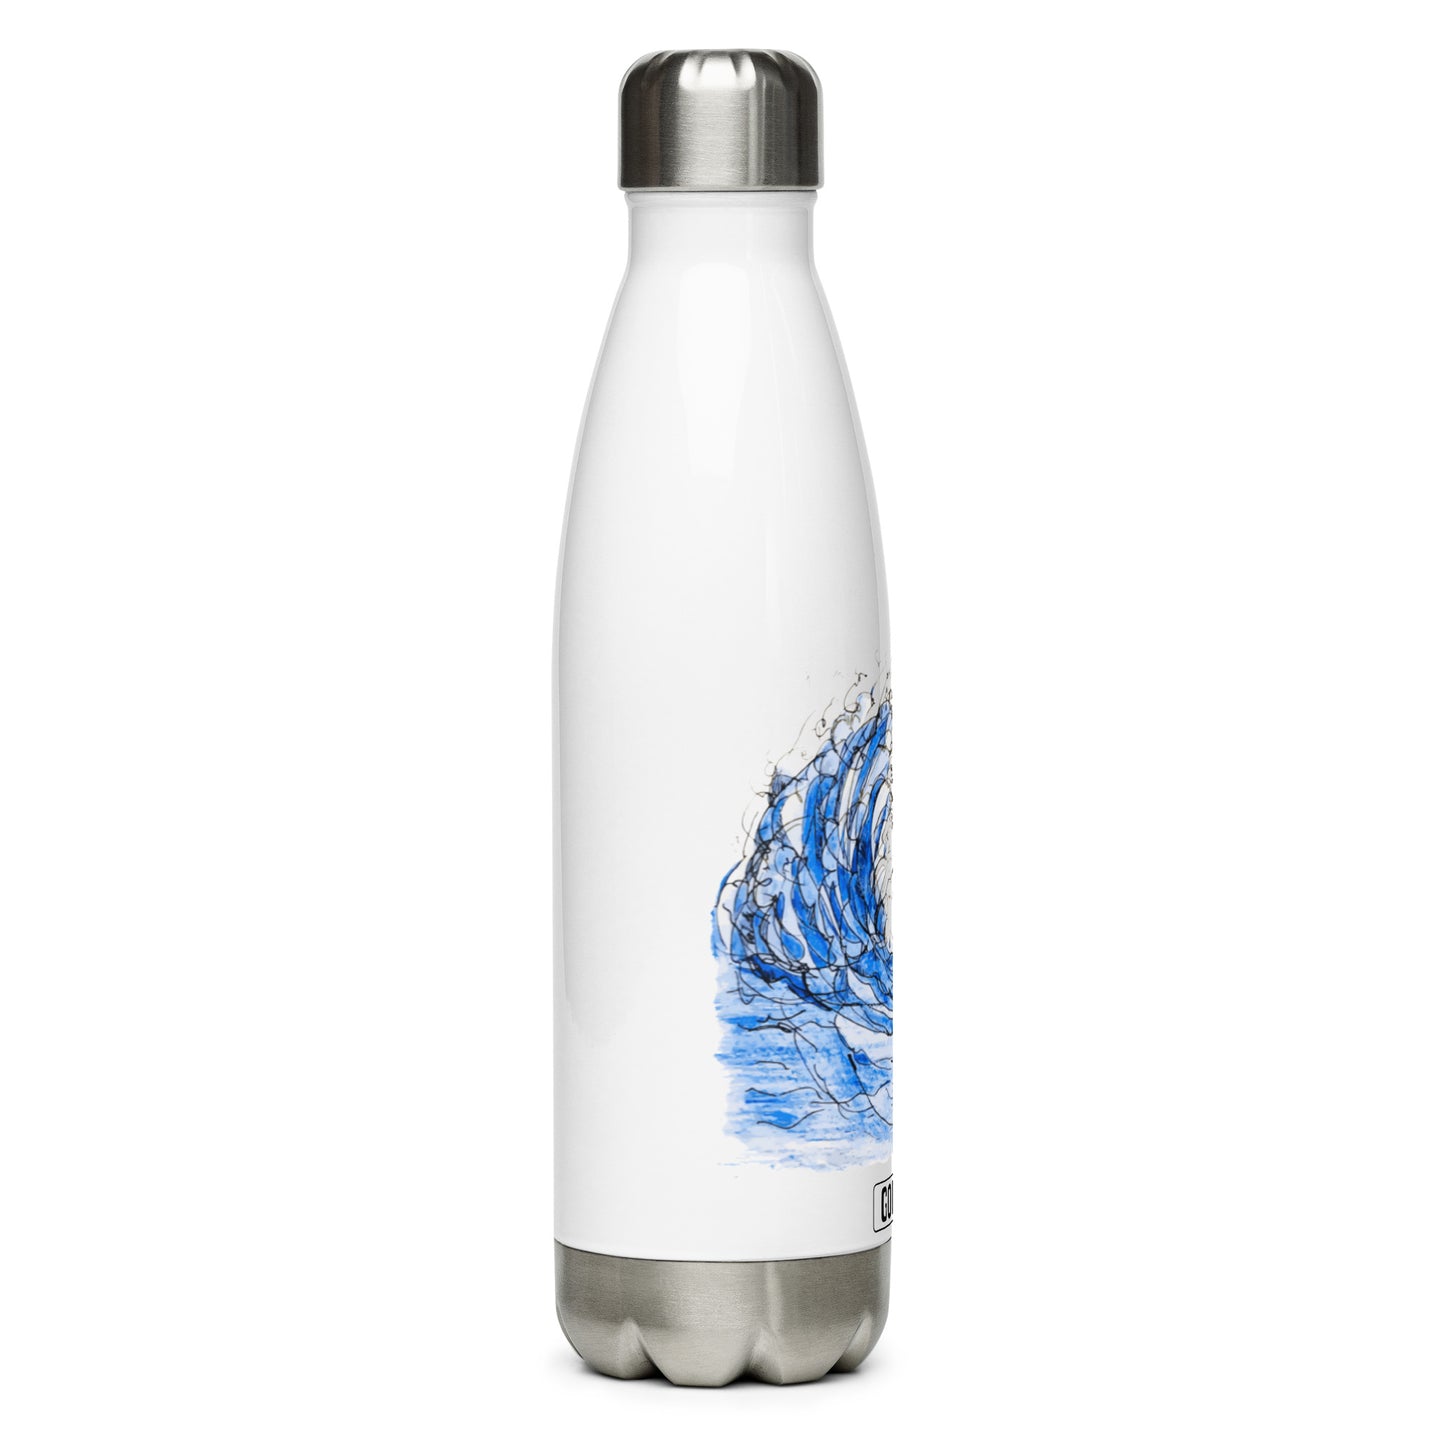 Santa Barbara Surf "Faith" - Stainless steel water bottle